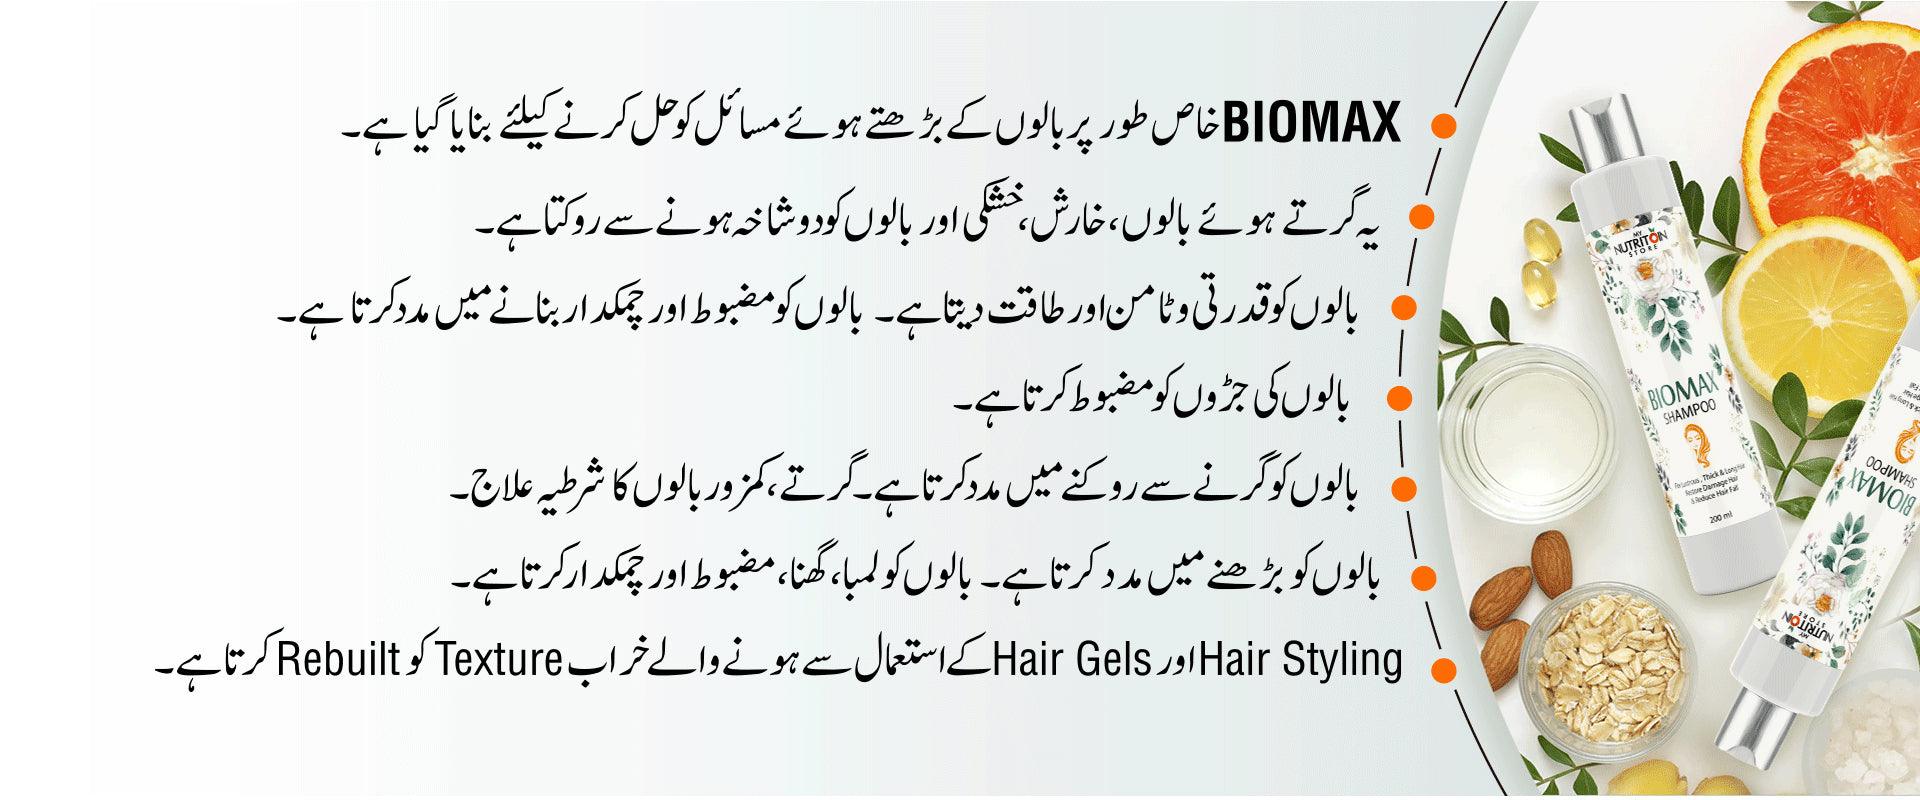 BioMax Shampoo & NutriMax Oil - Healthifyme.pk